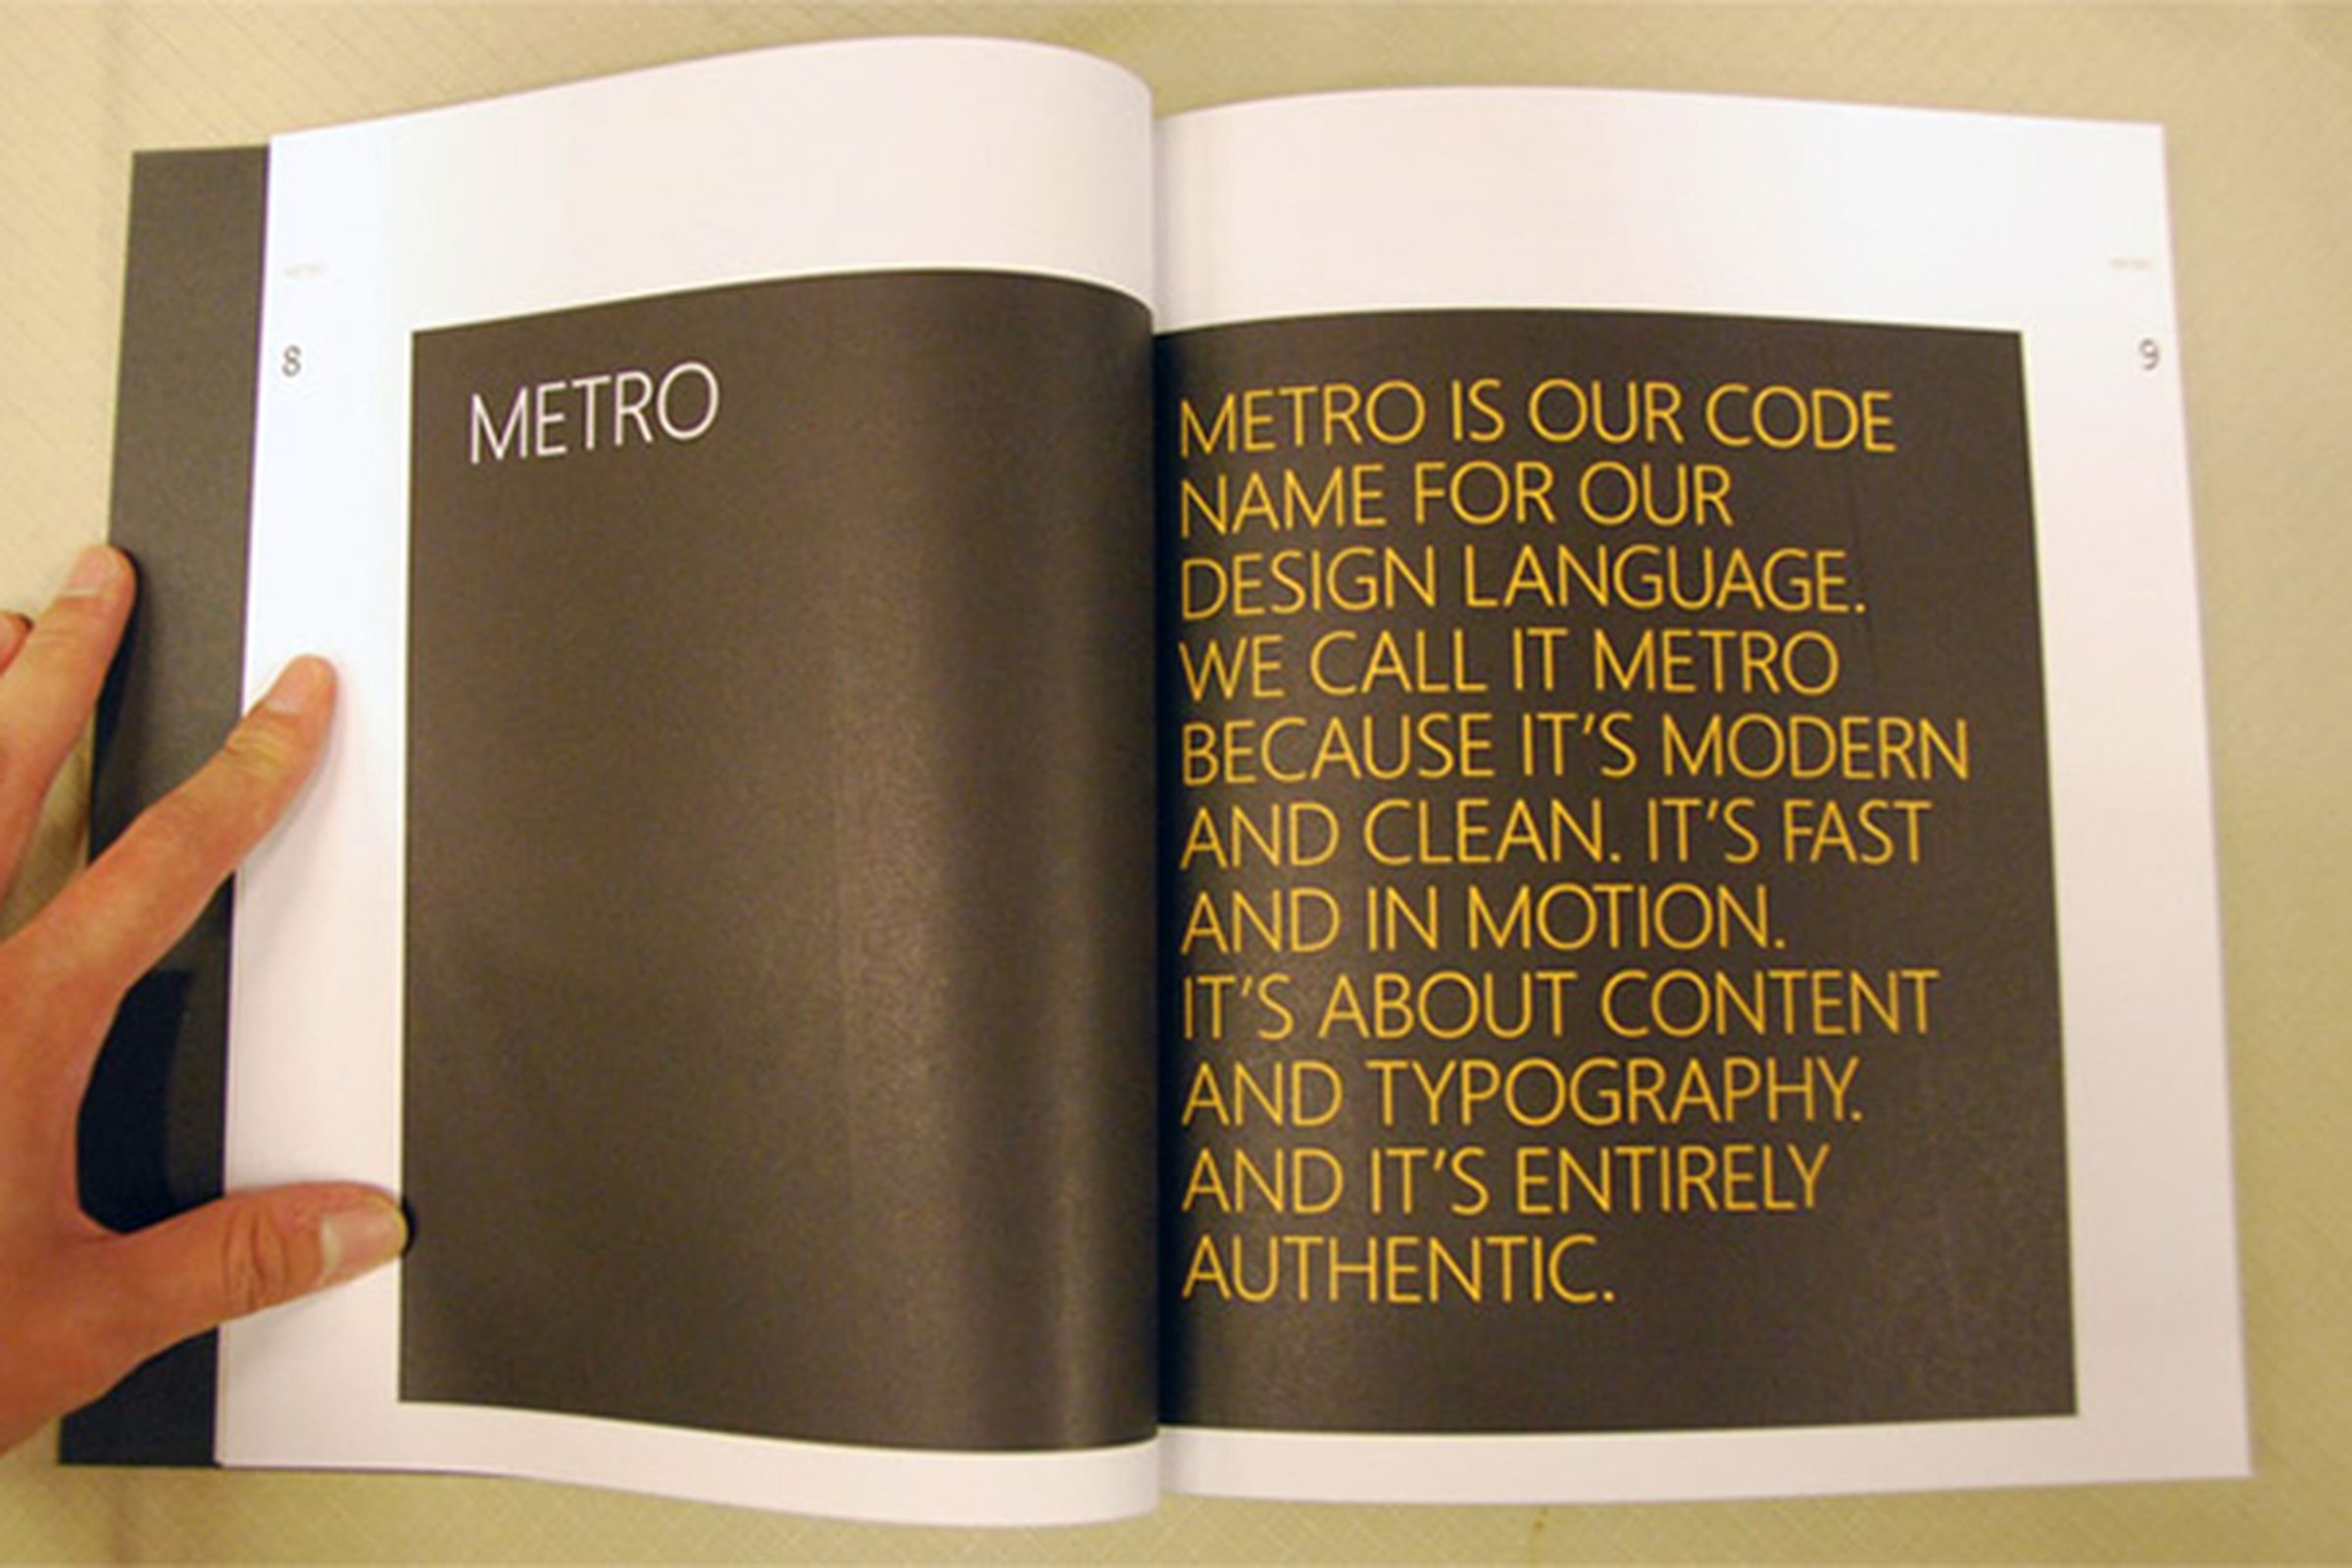 Metro design (istartedsomething.com)